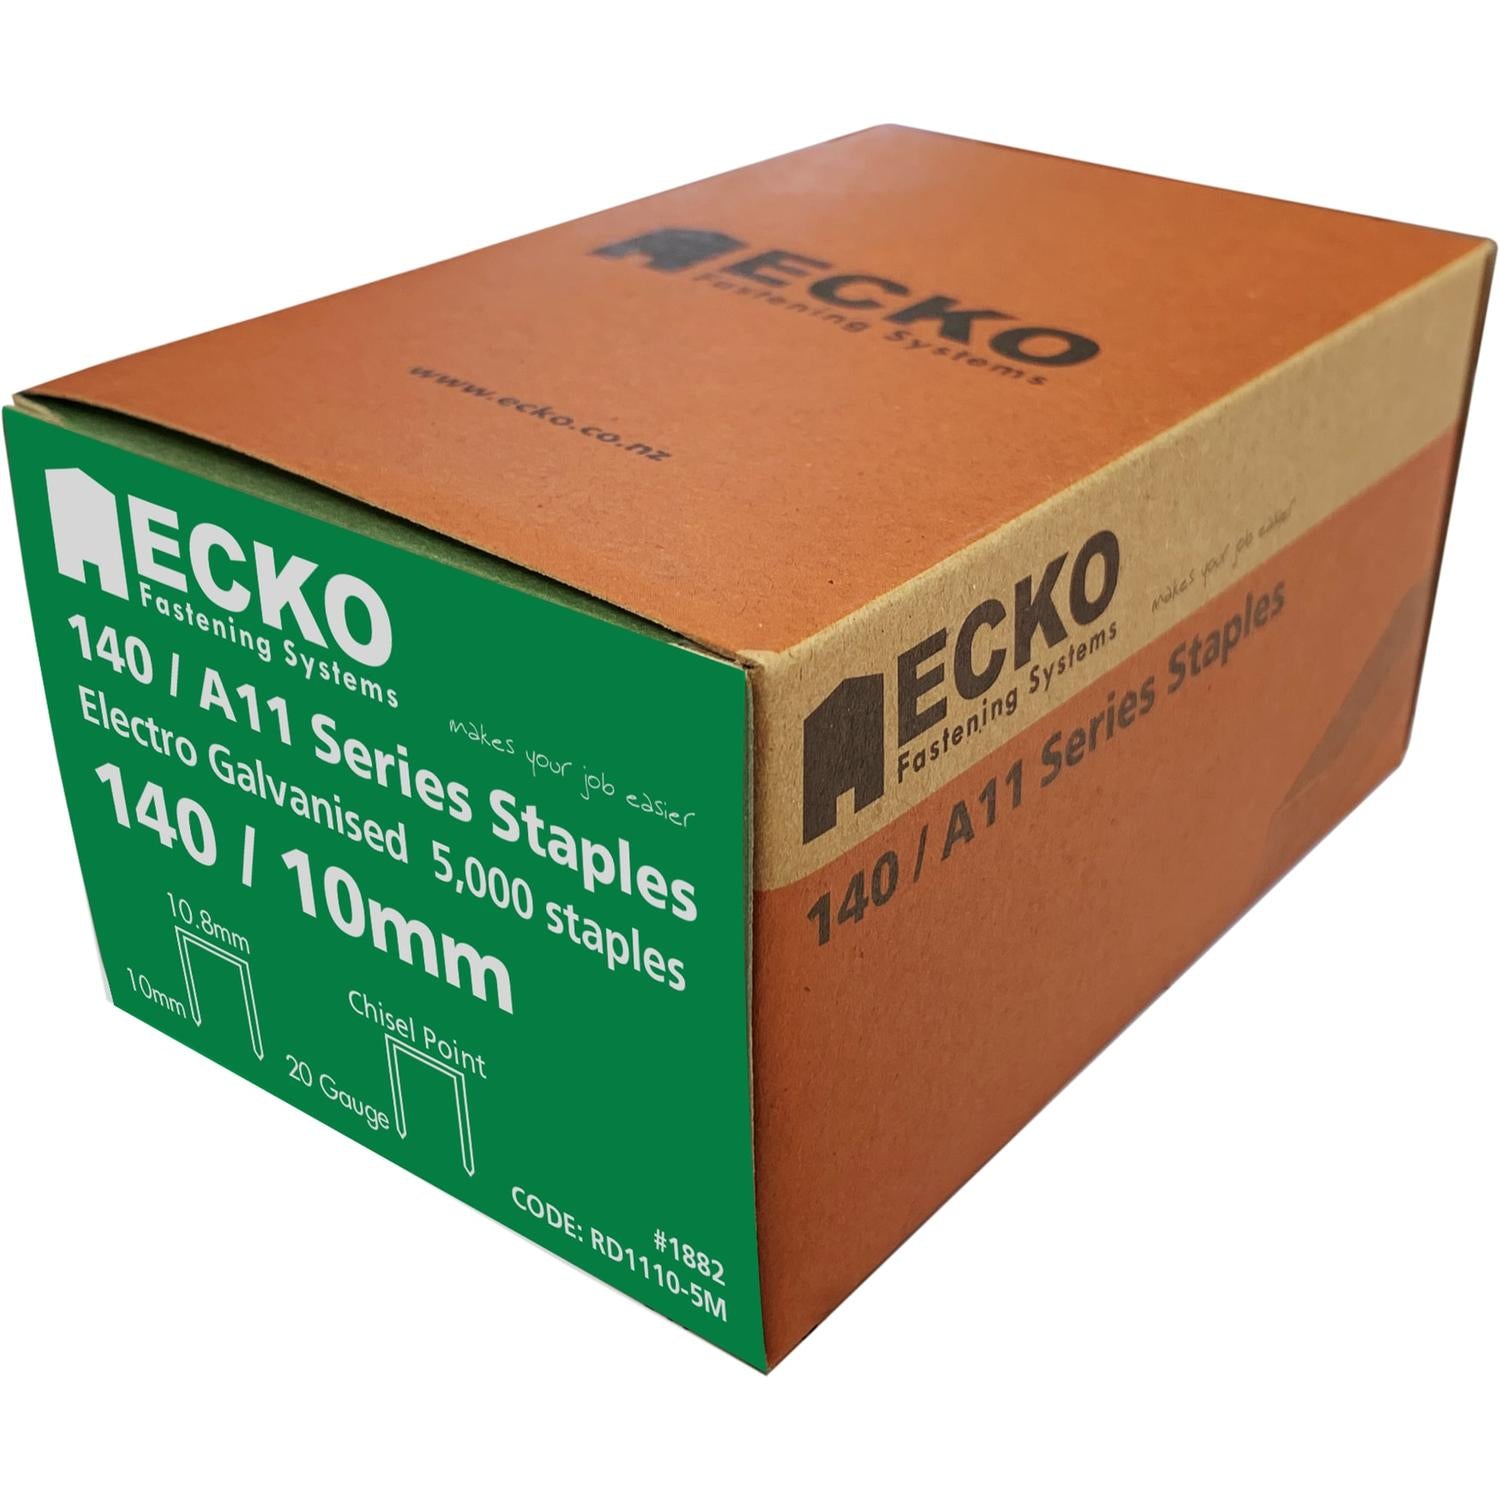 Ecko 140/A11 Series Staples 140/10Mm Electro Galvanised (5000 Box)